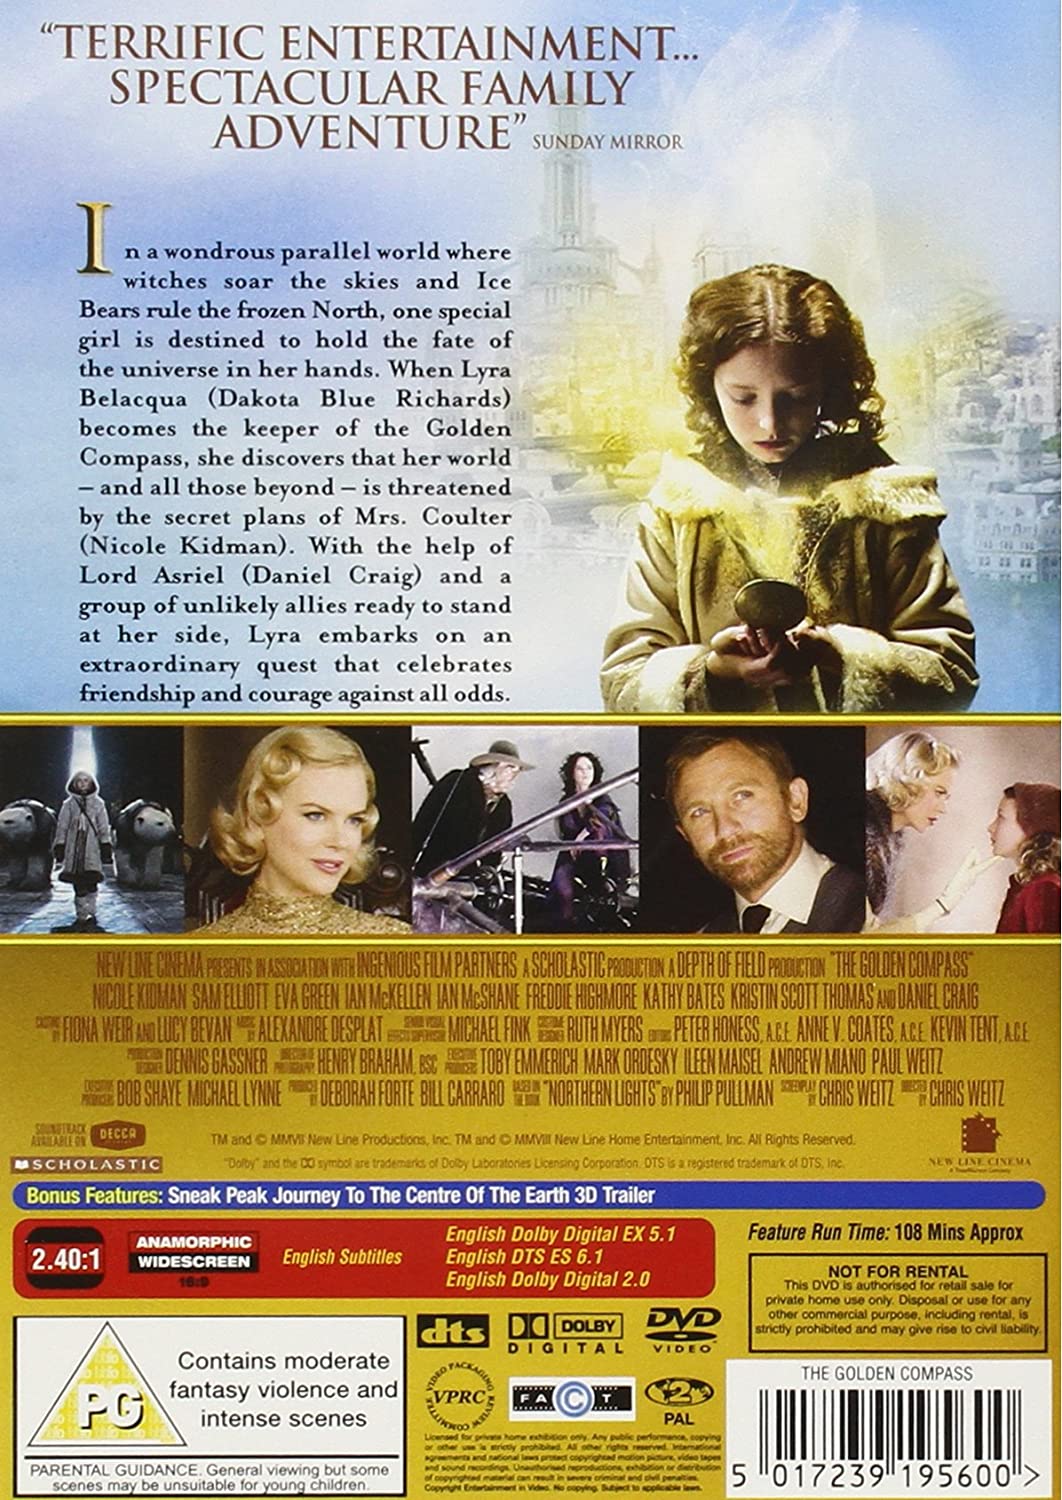 The Golden Compass [2007] - Fantasy/Adventure  [DVD]